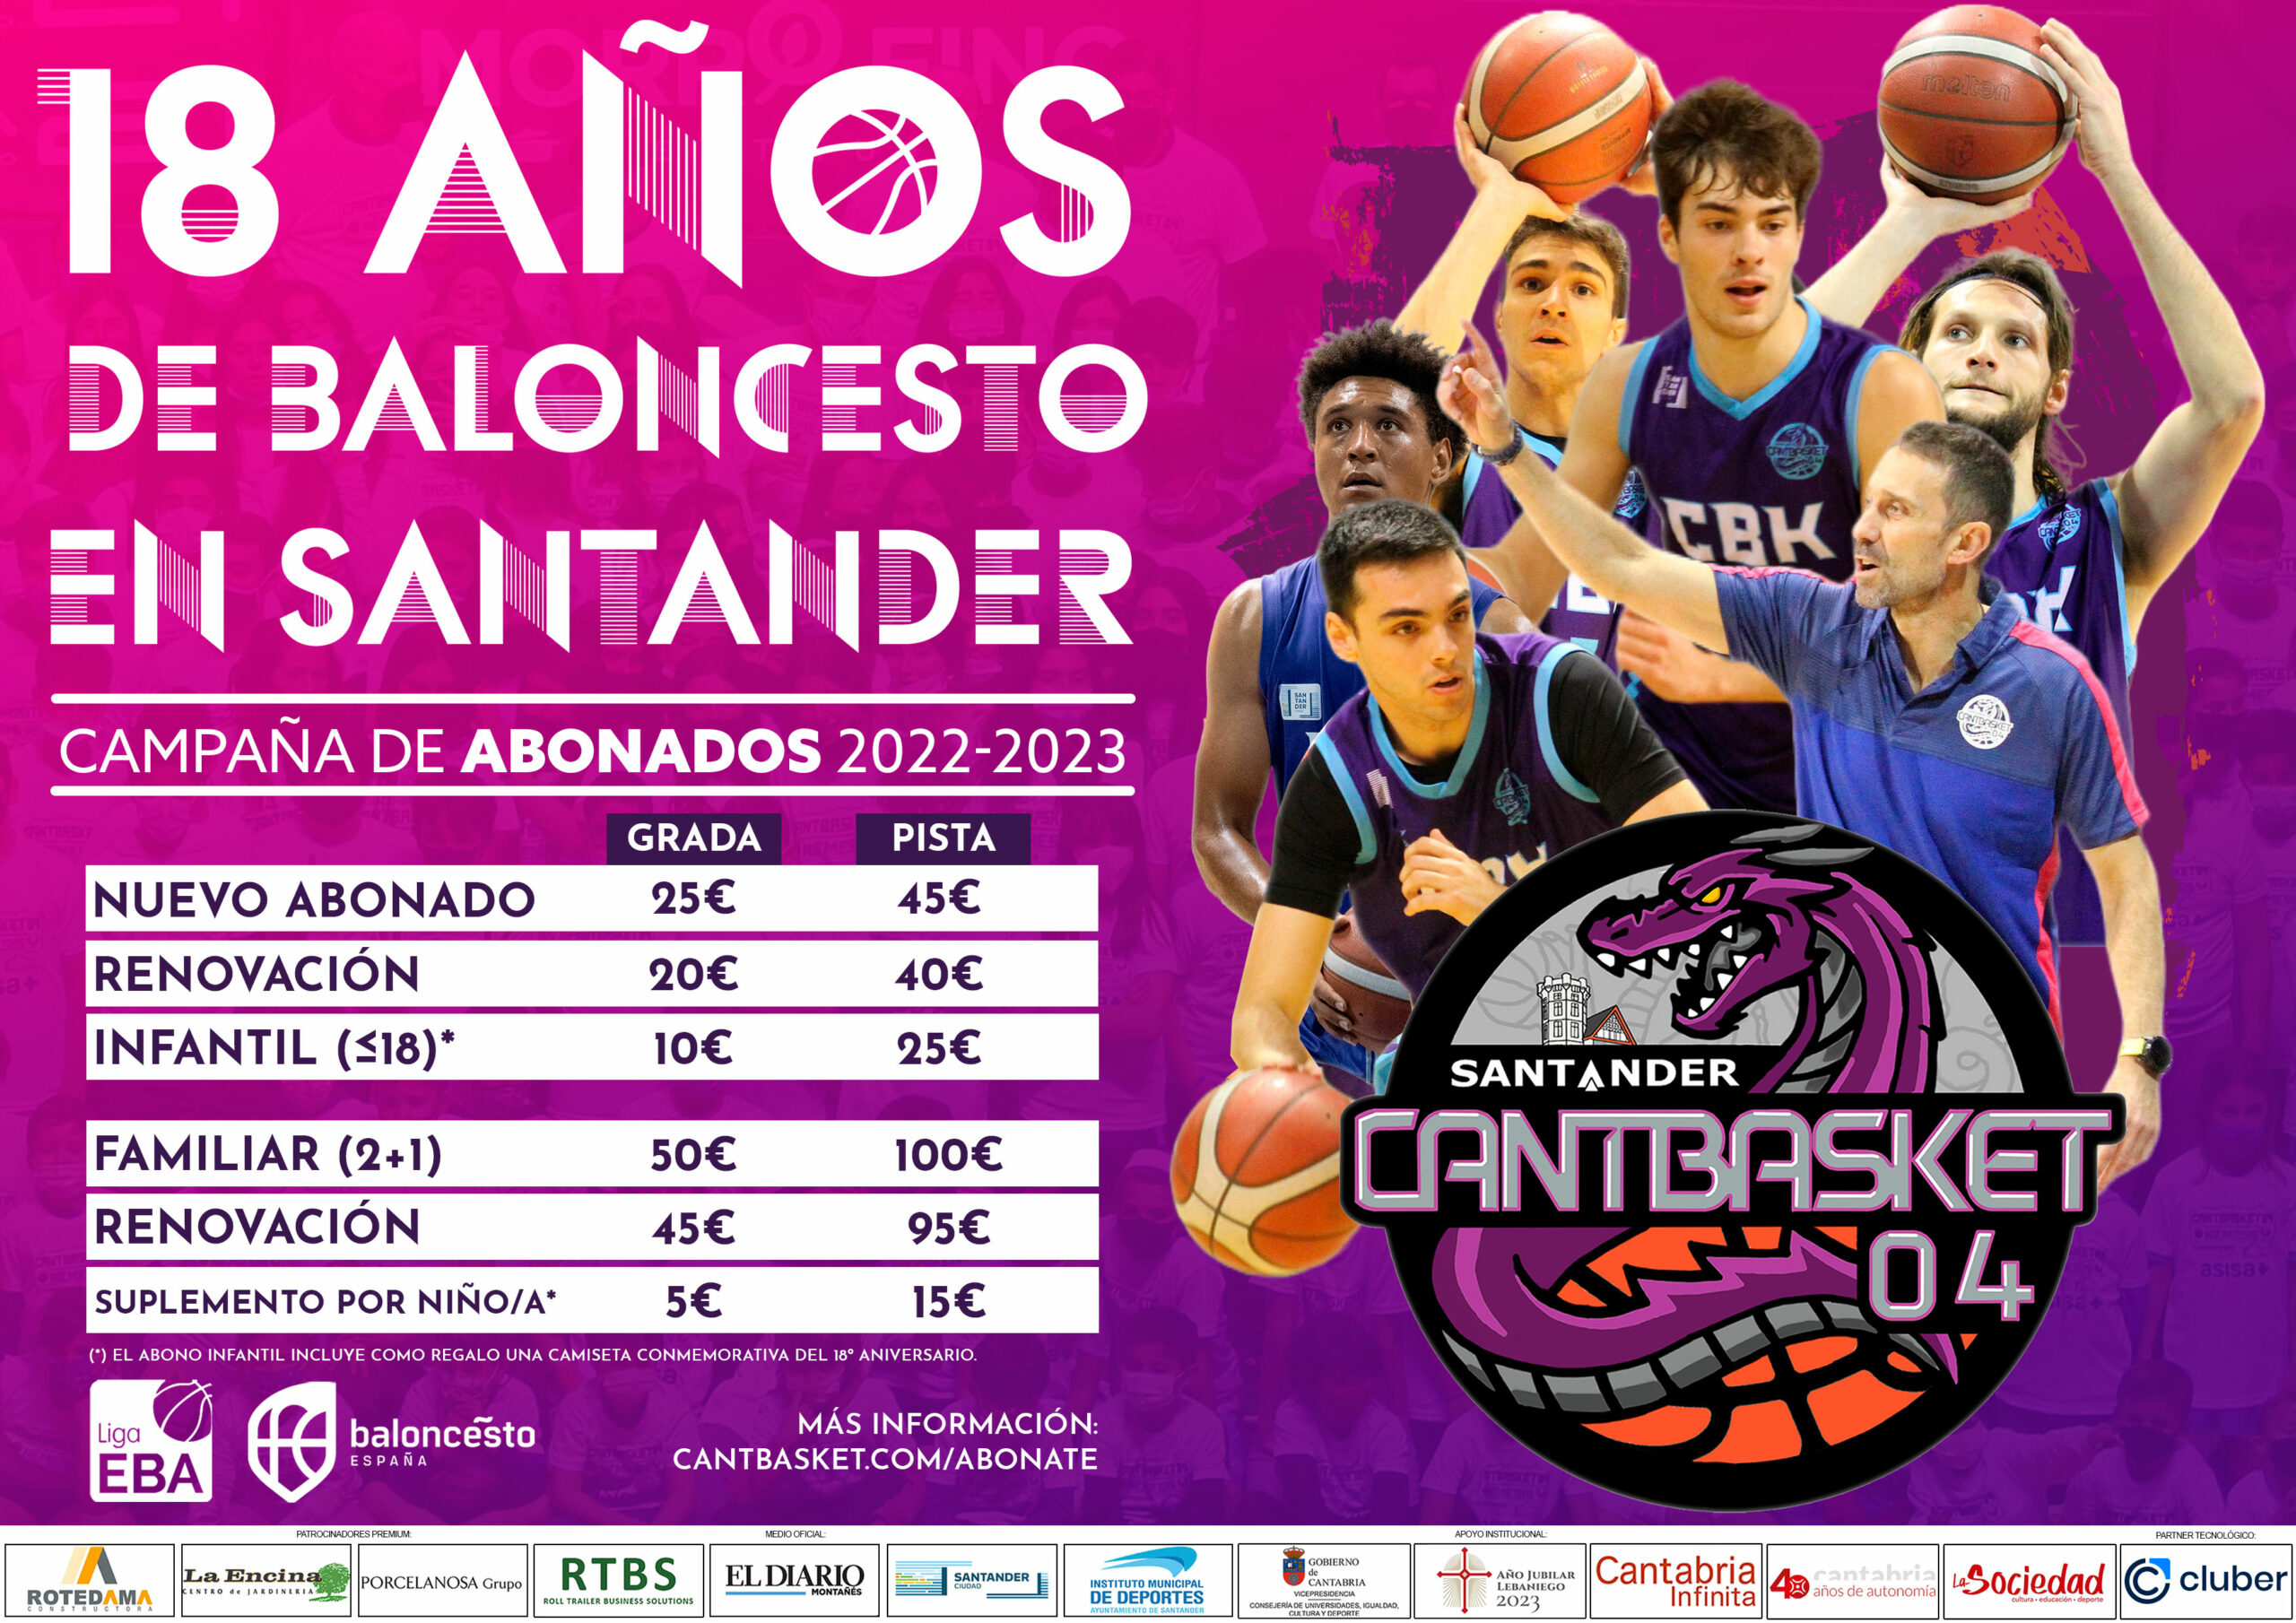 Campaña de abonados – Temporada 2022-2023 – Cantbasket 04 Santander